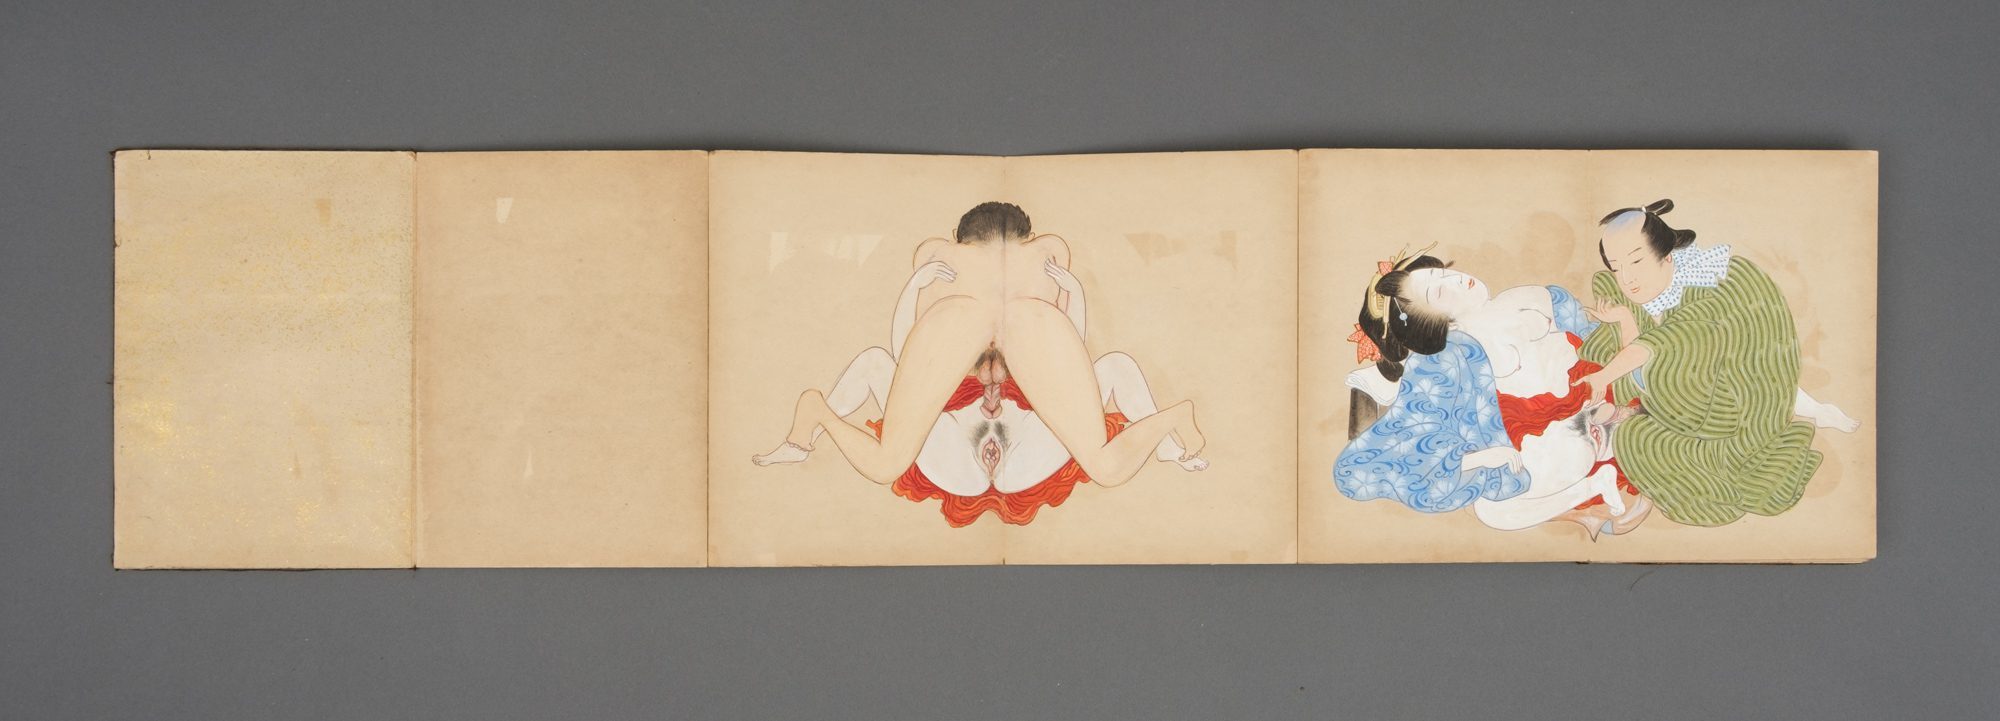 A JAPANESE EROTIC BOOK “SHUNGA”, 1912-1926 (TAISHO PERIOD) - Image 3 of 29